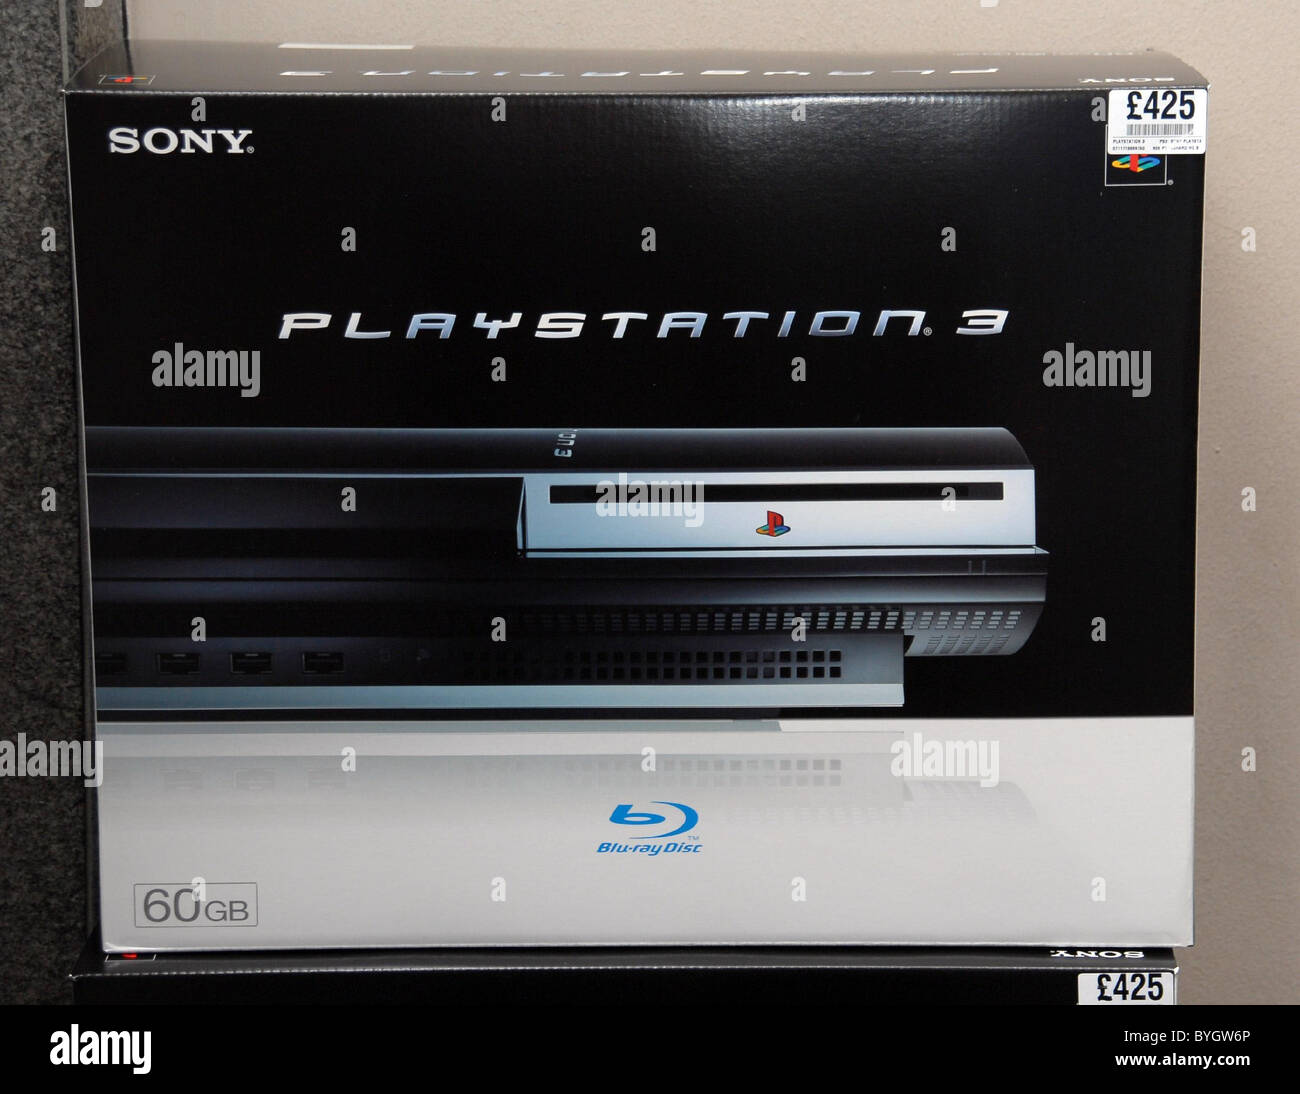 Atmosphere Playstation 3 launch at HMV Oxford Street London, England -  23.03.07 Stock Photo - Alamy